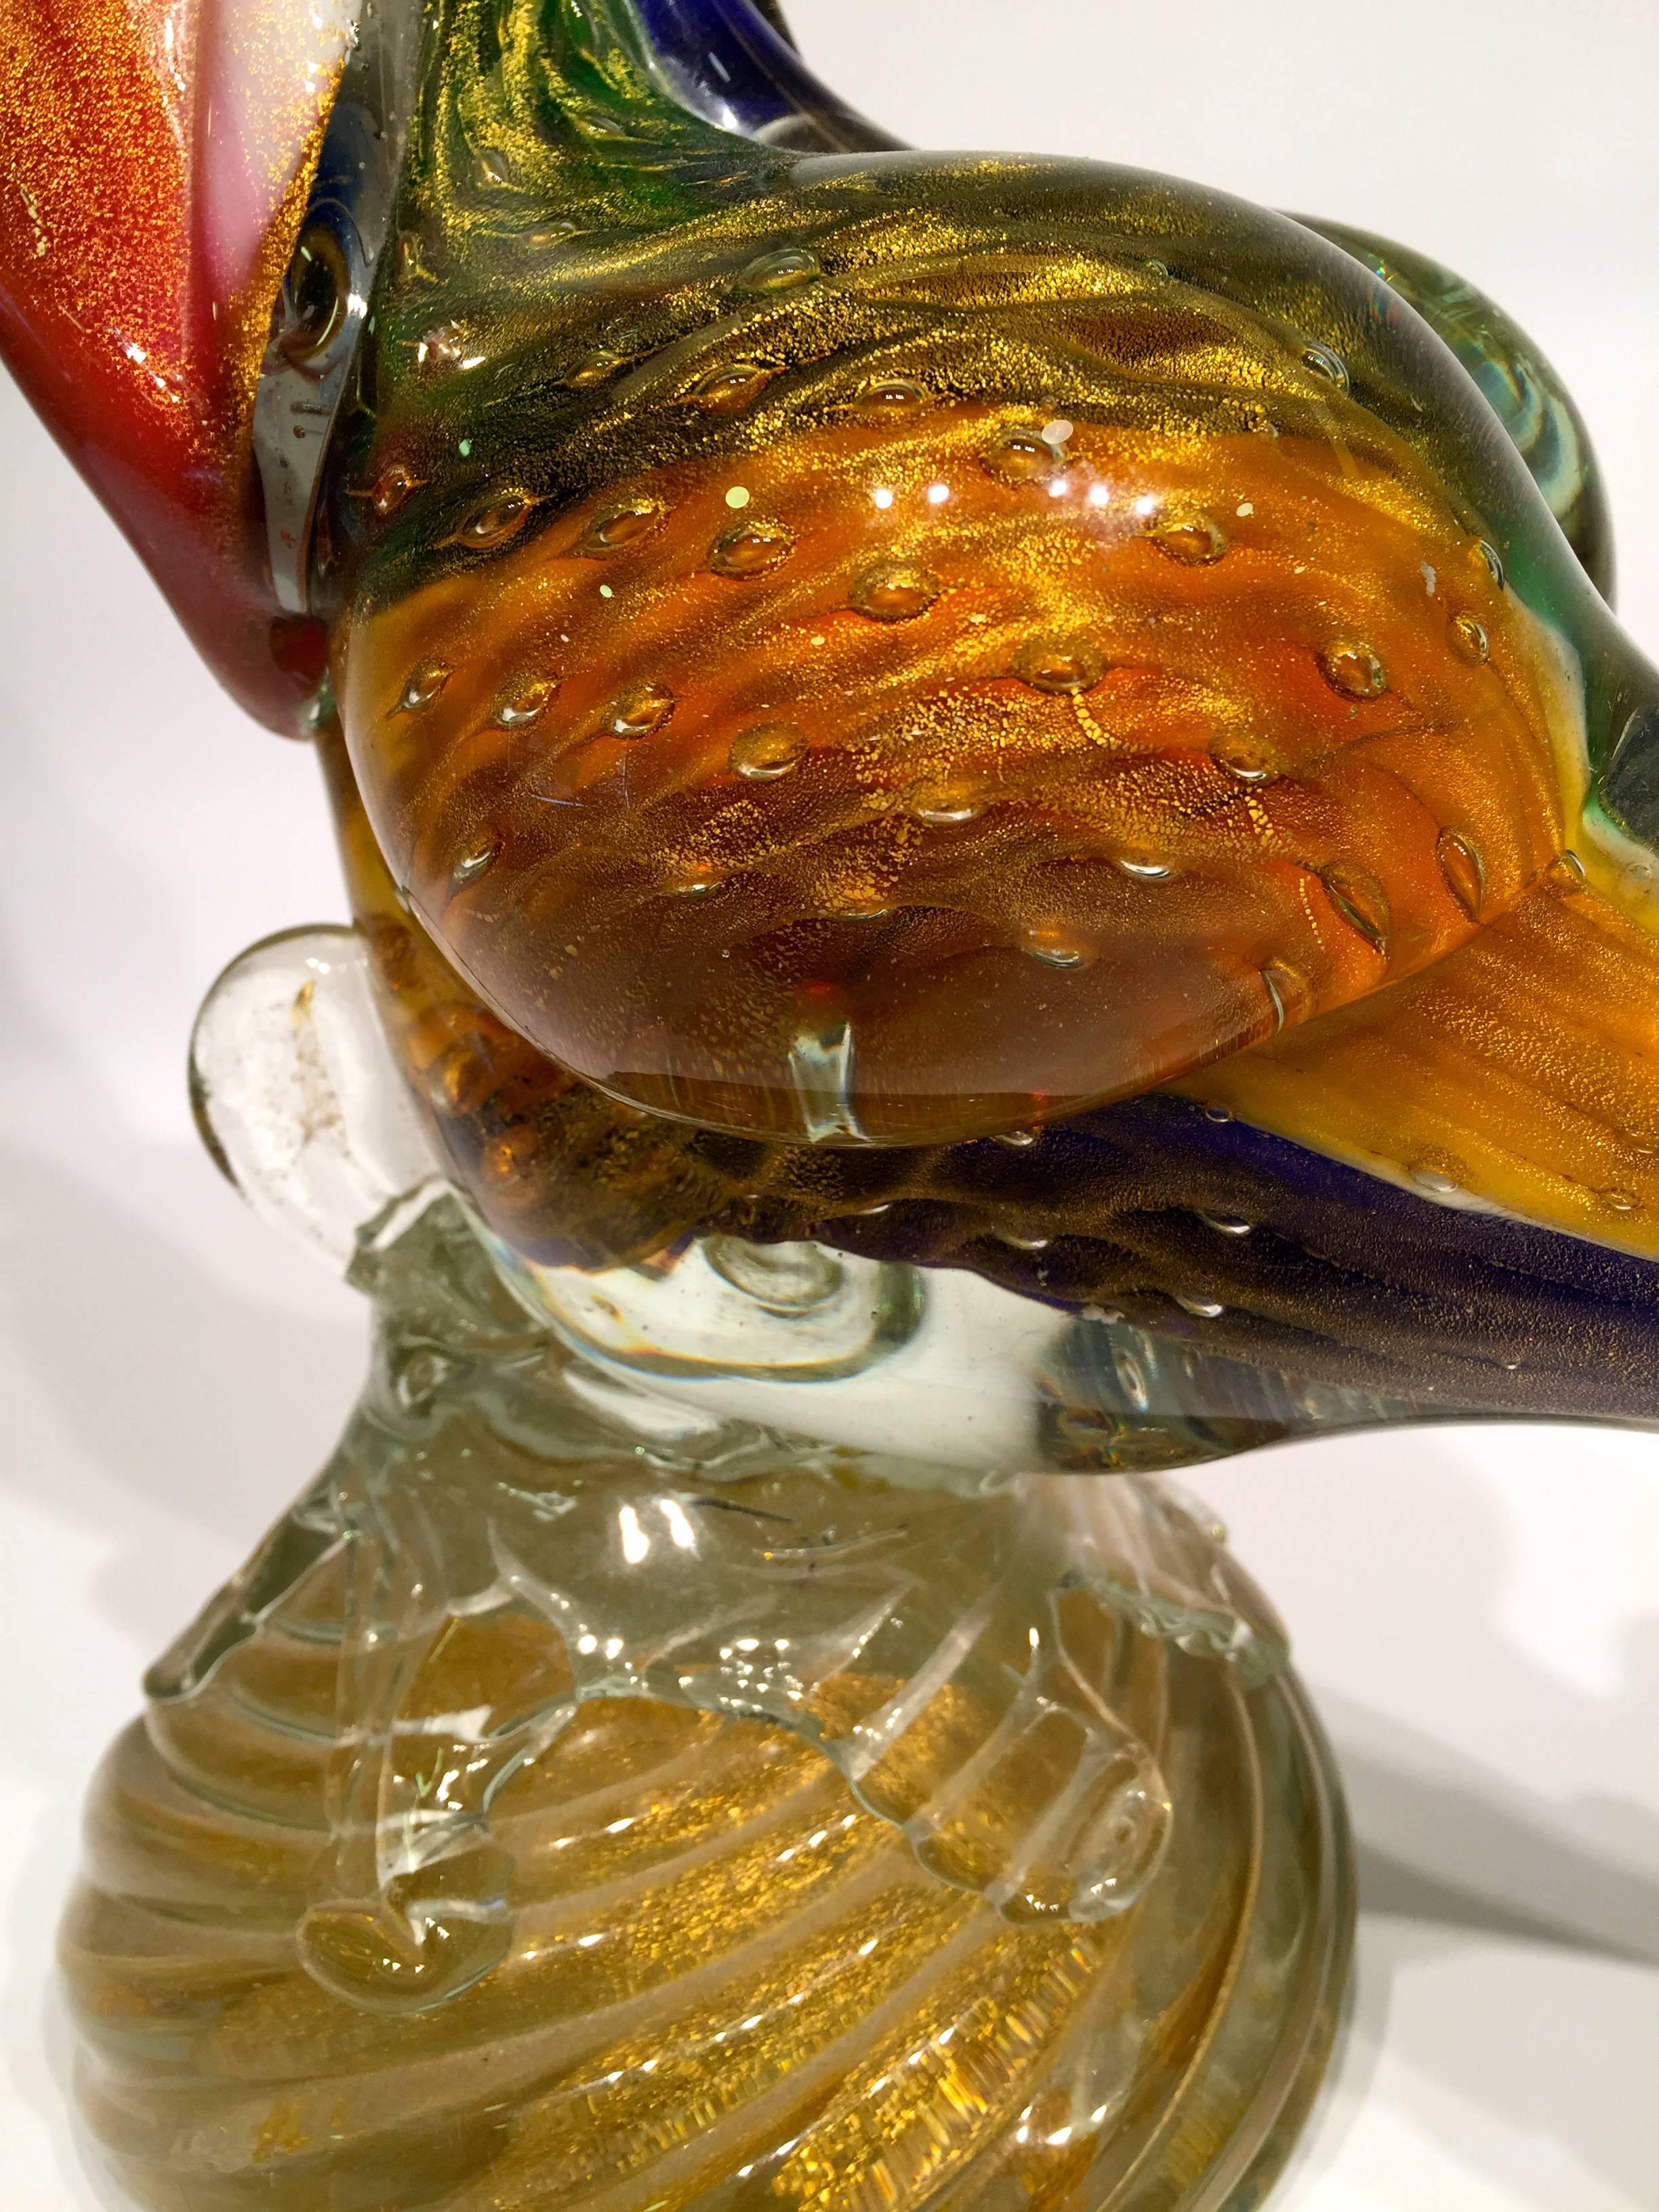 Italian Ercole Barovier 1950 Multi-Color Cock in Murano Glass with Gold Leaf For Sale